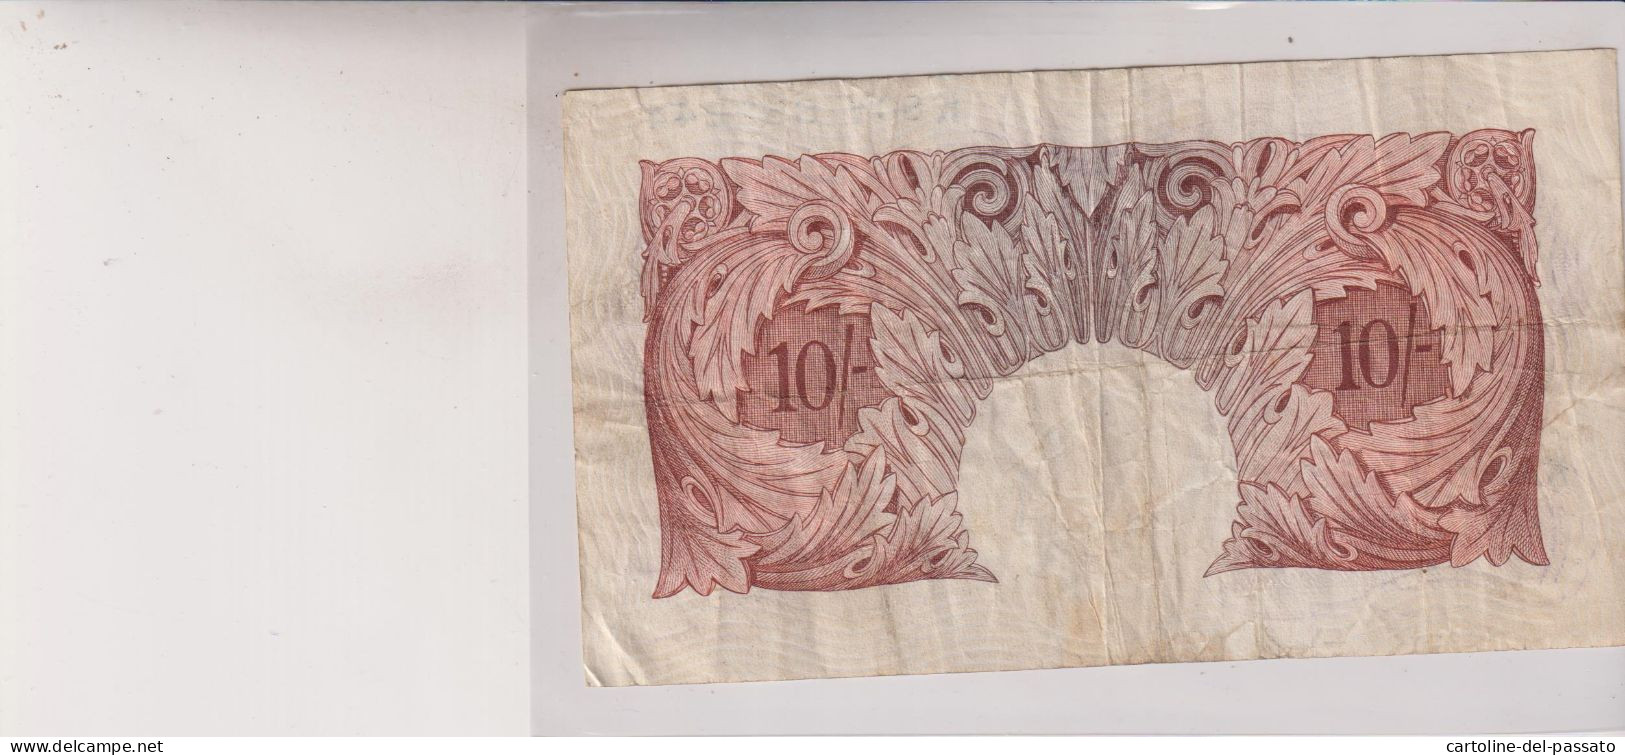 Bank Of England Ten Shillings 2 Scans - 10 Shillings